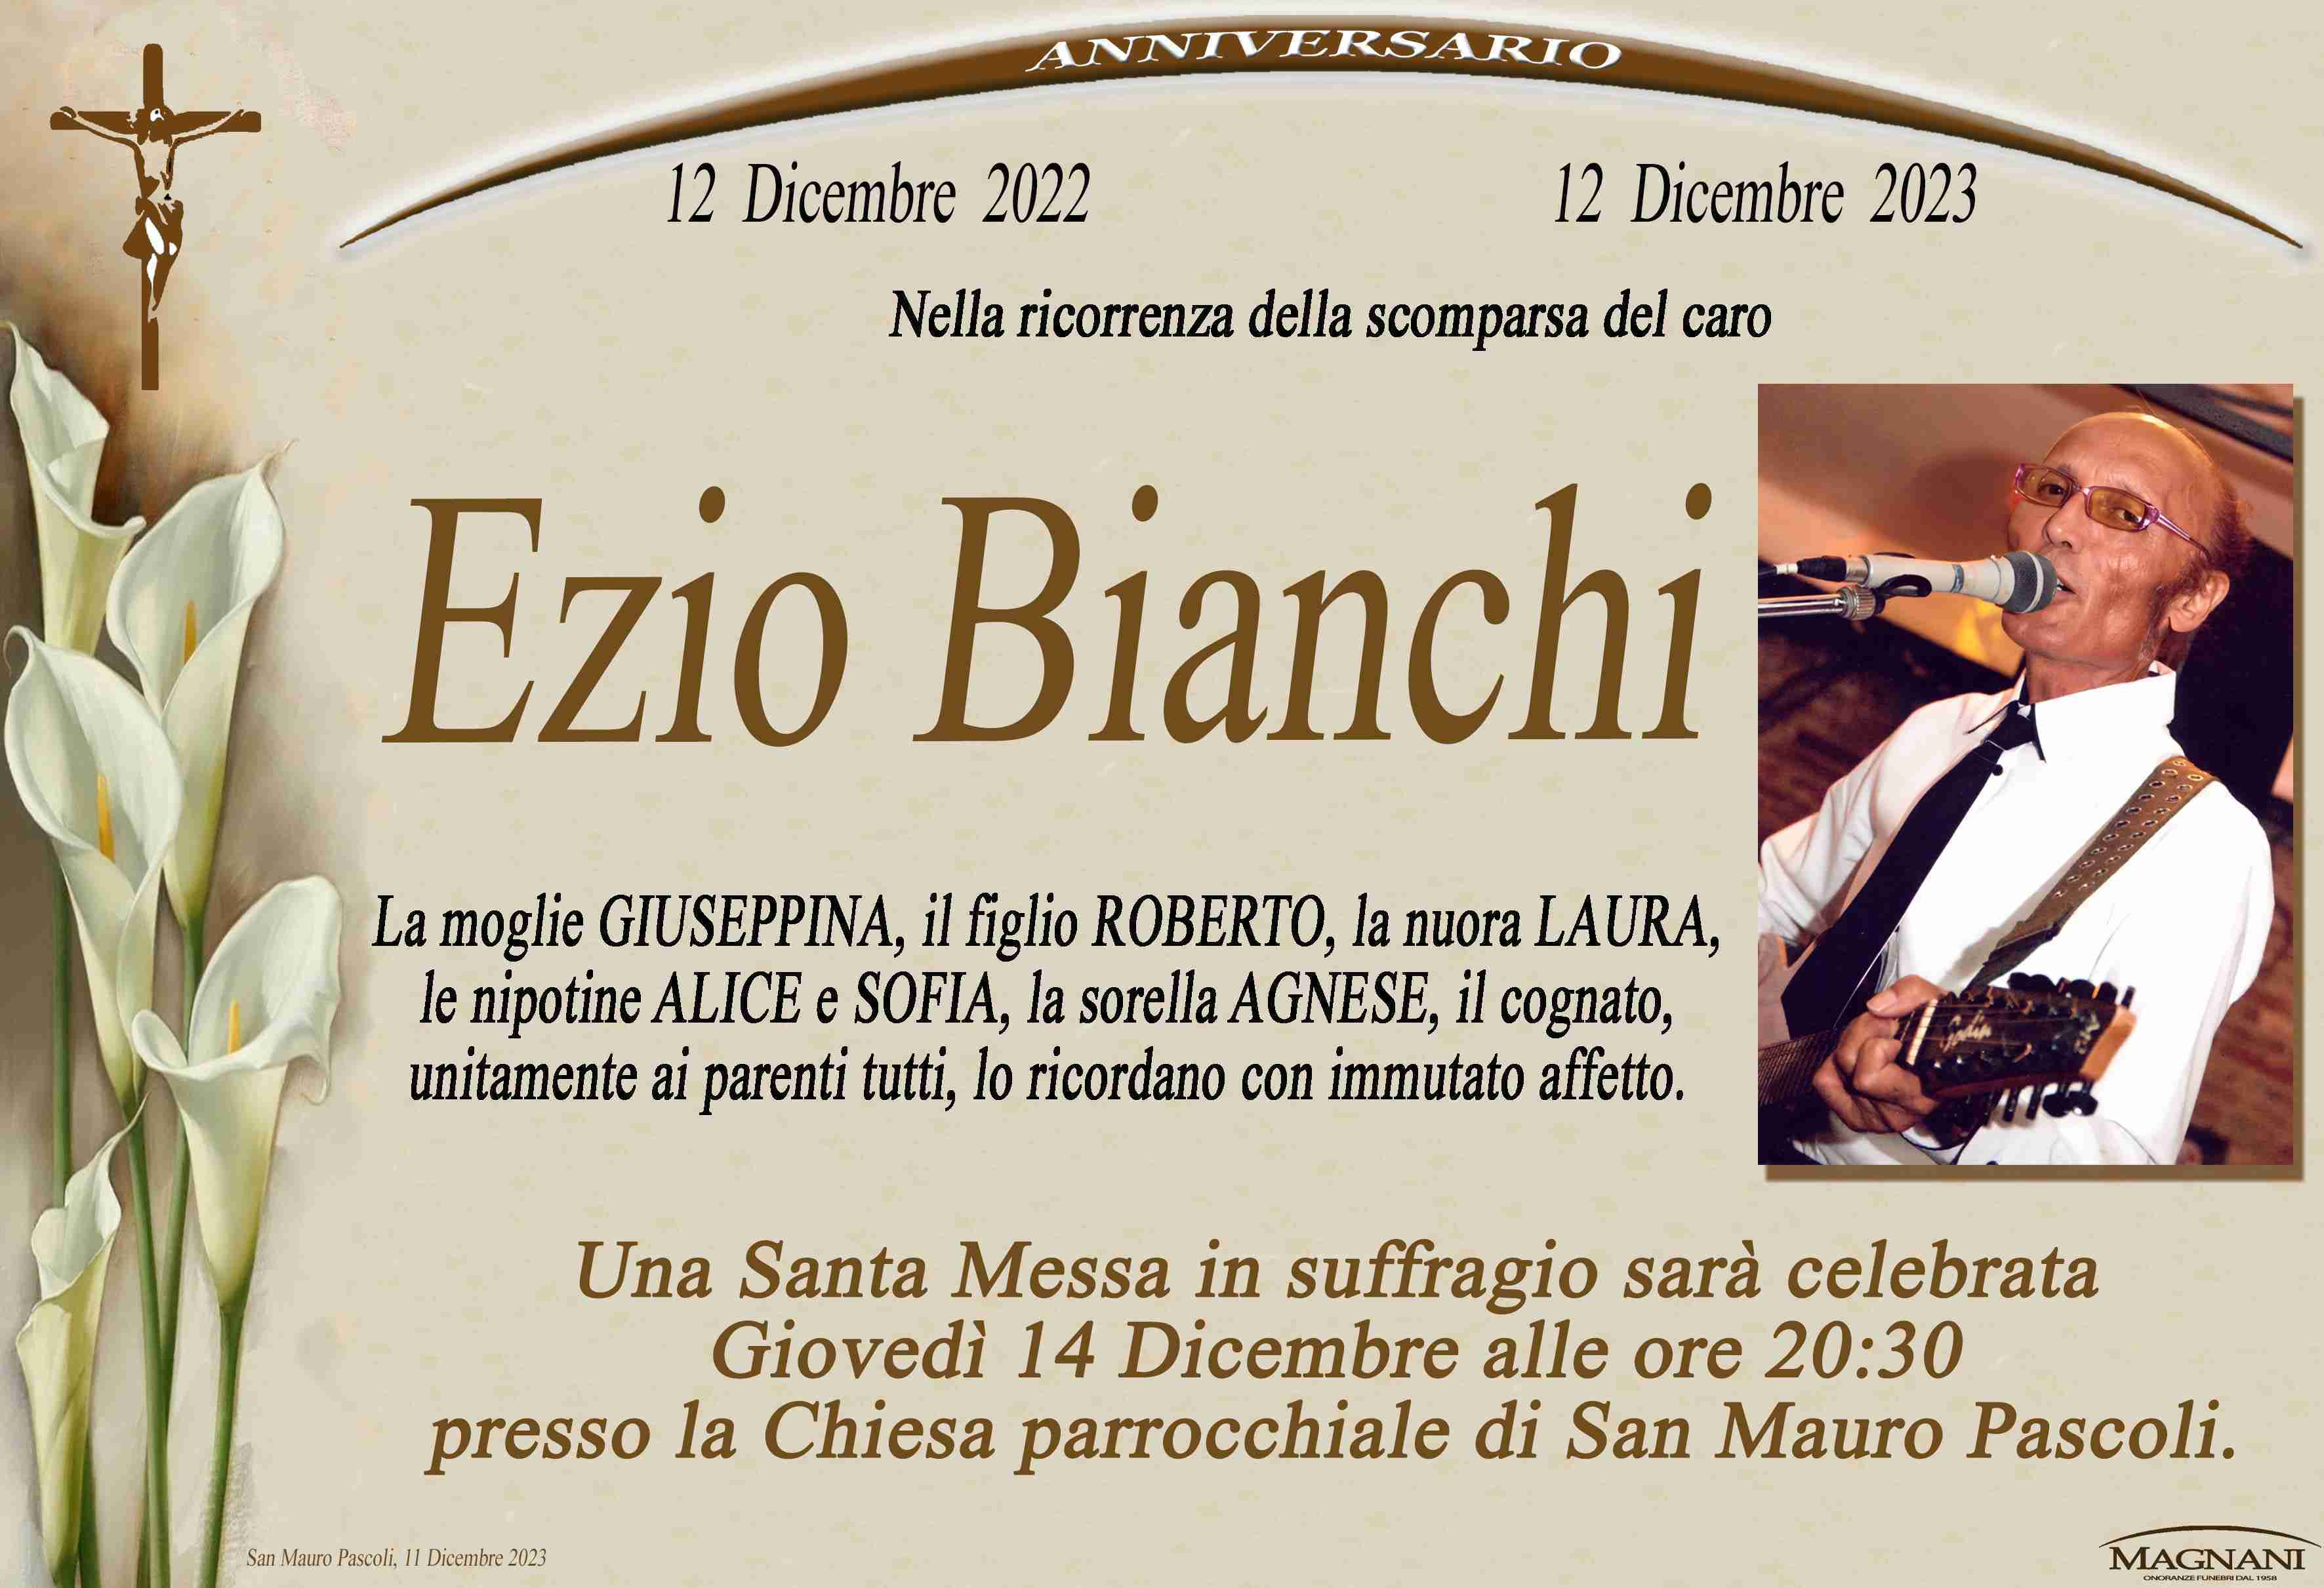 Ezio Bianchi